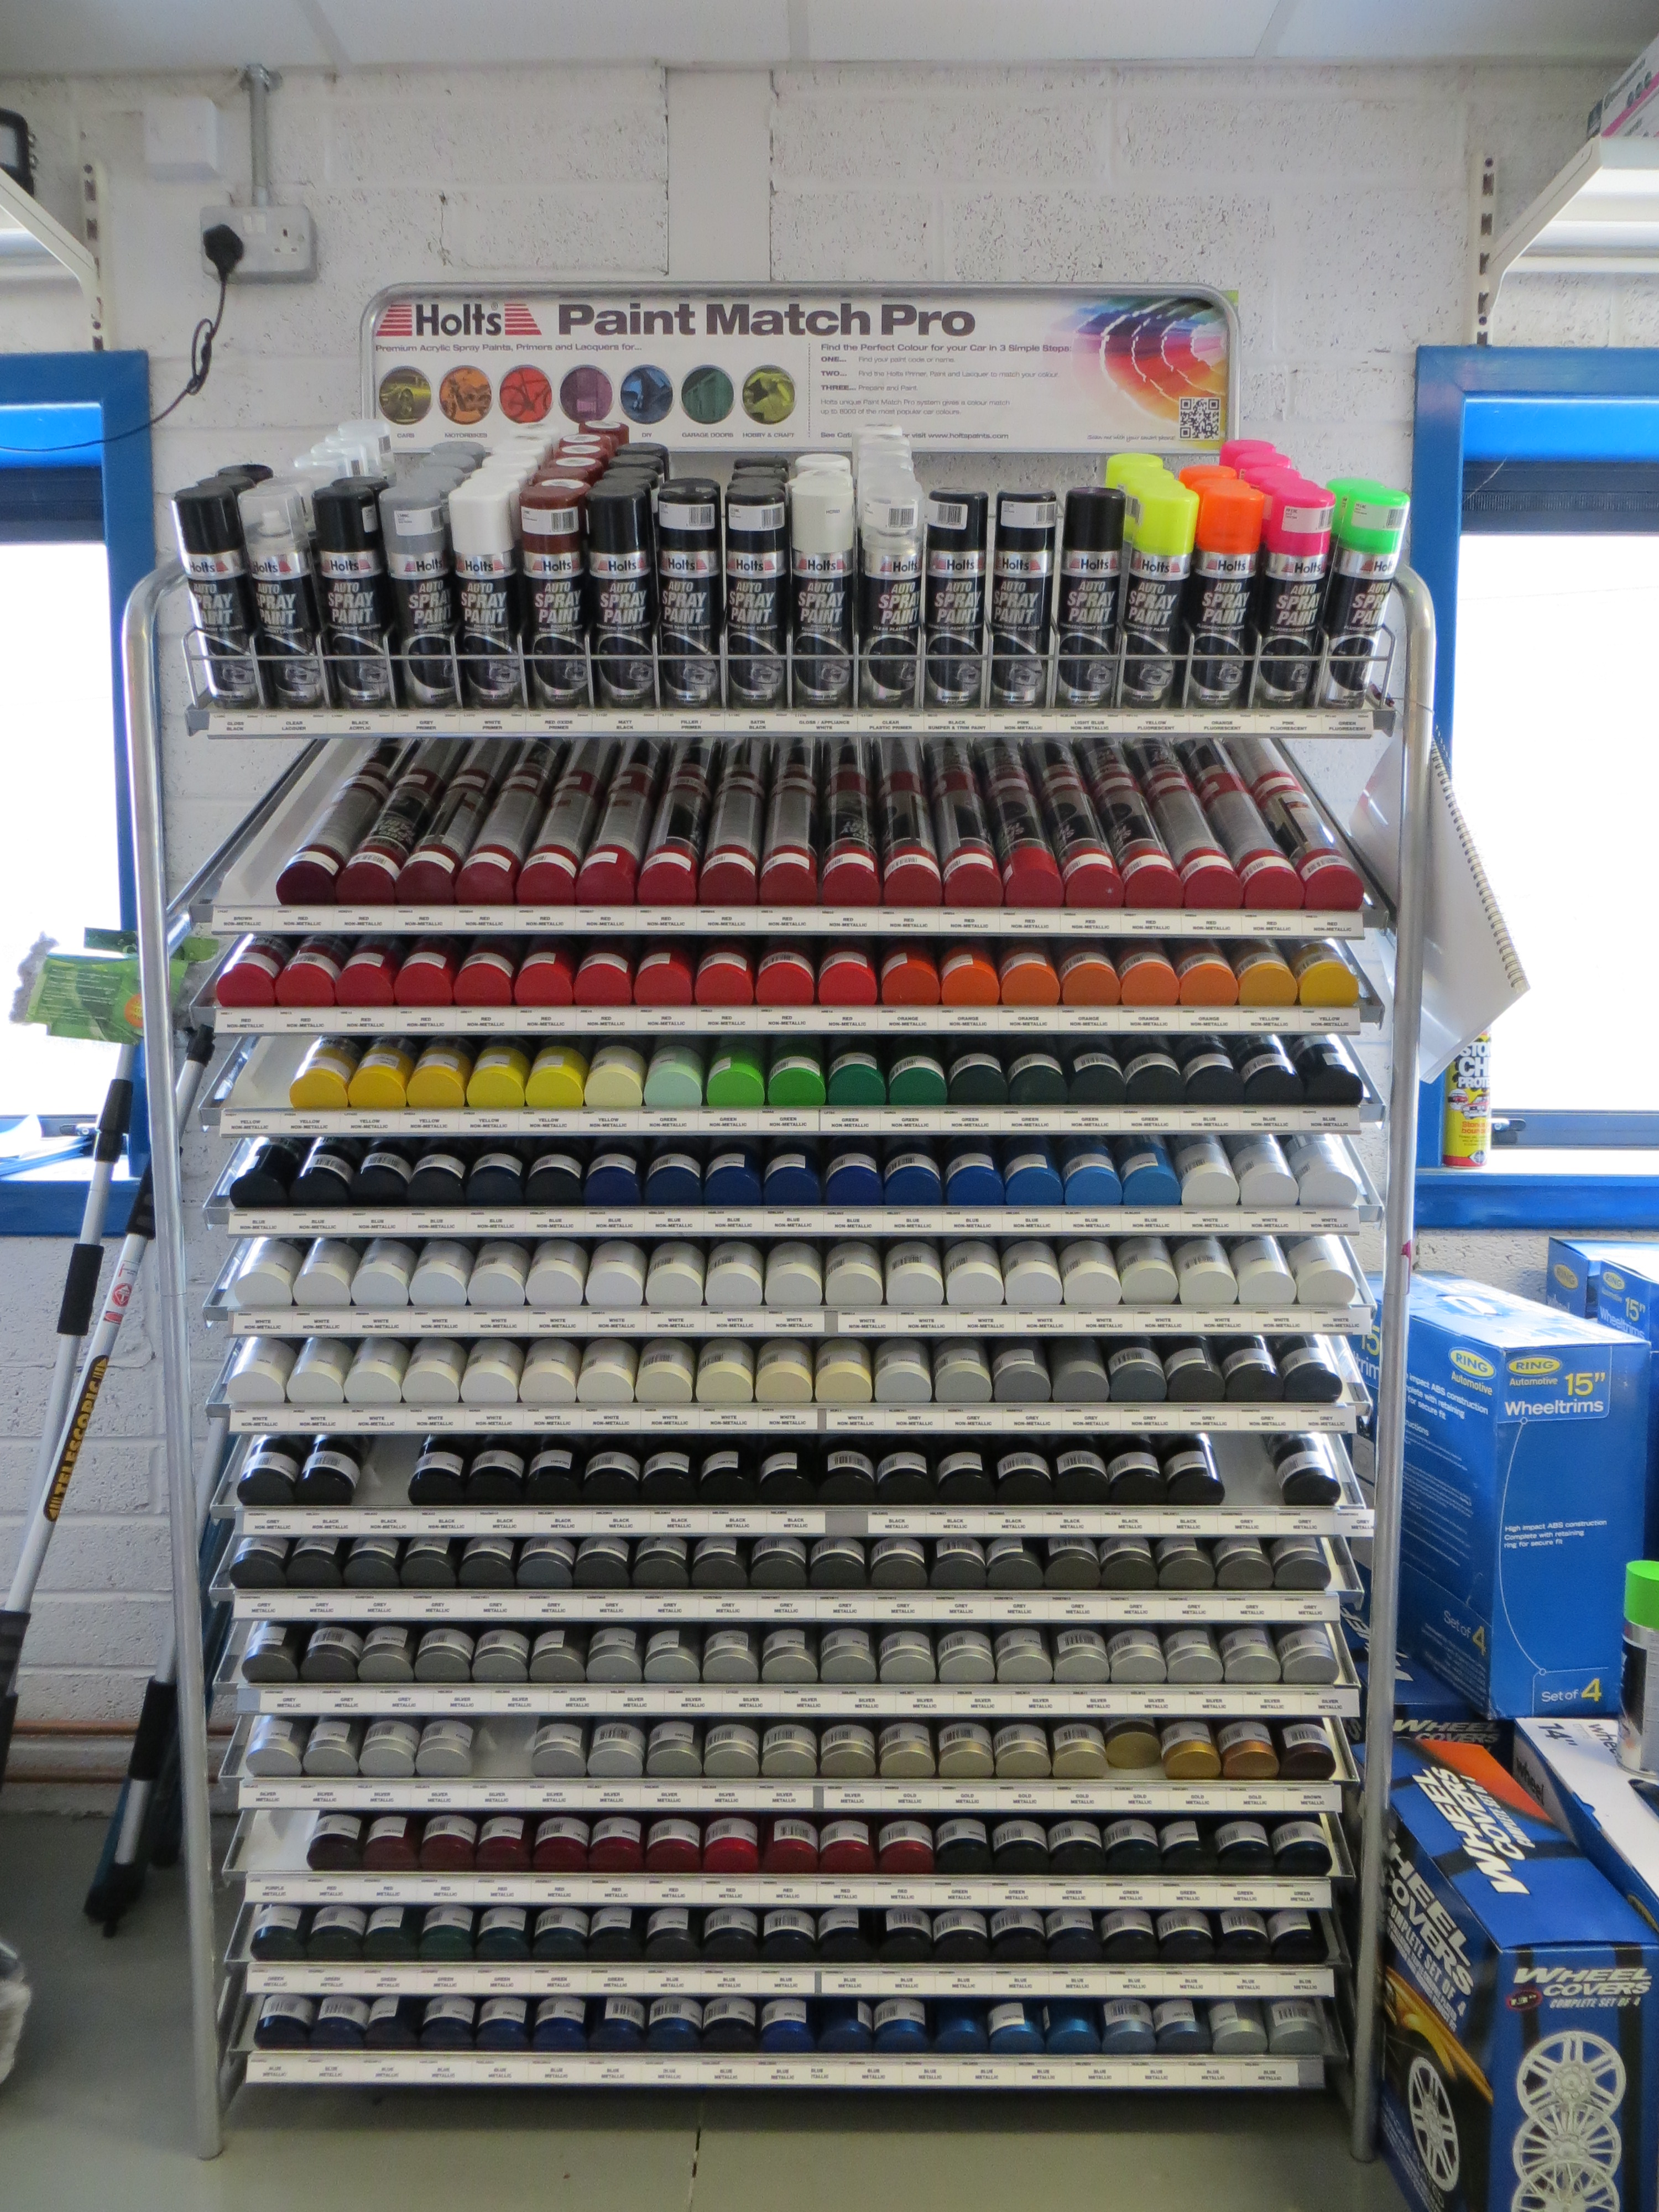 Holts Spray Paint Colour Chart